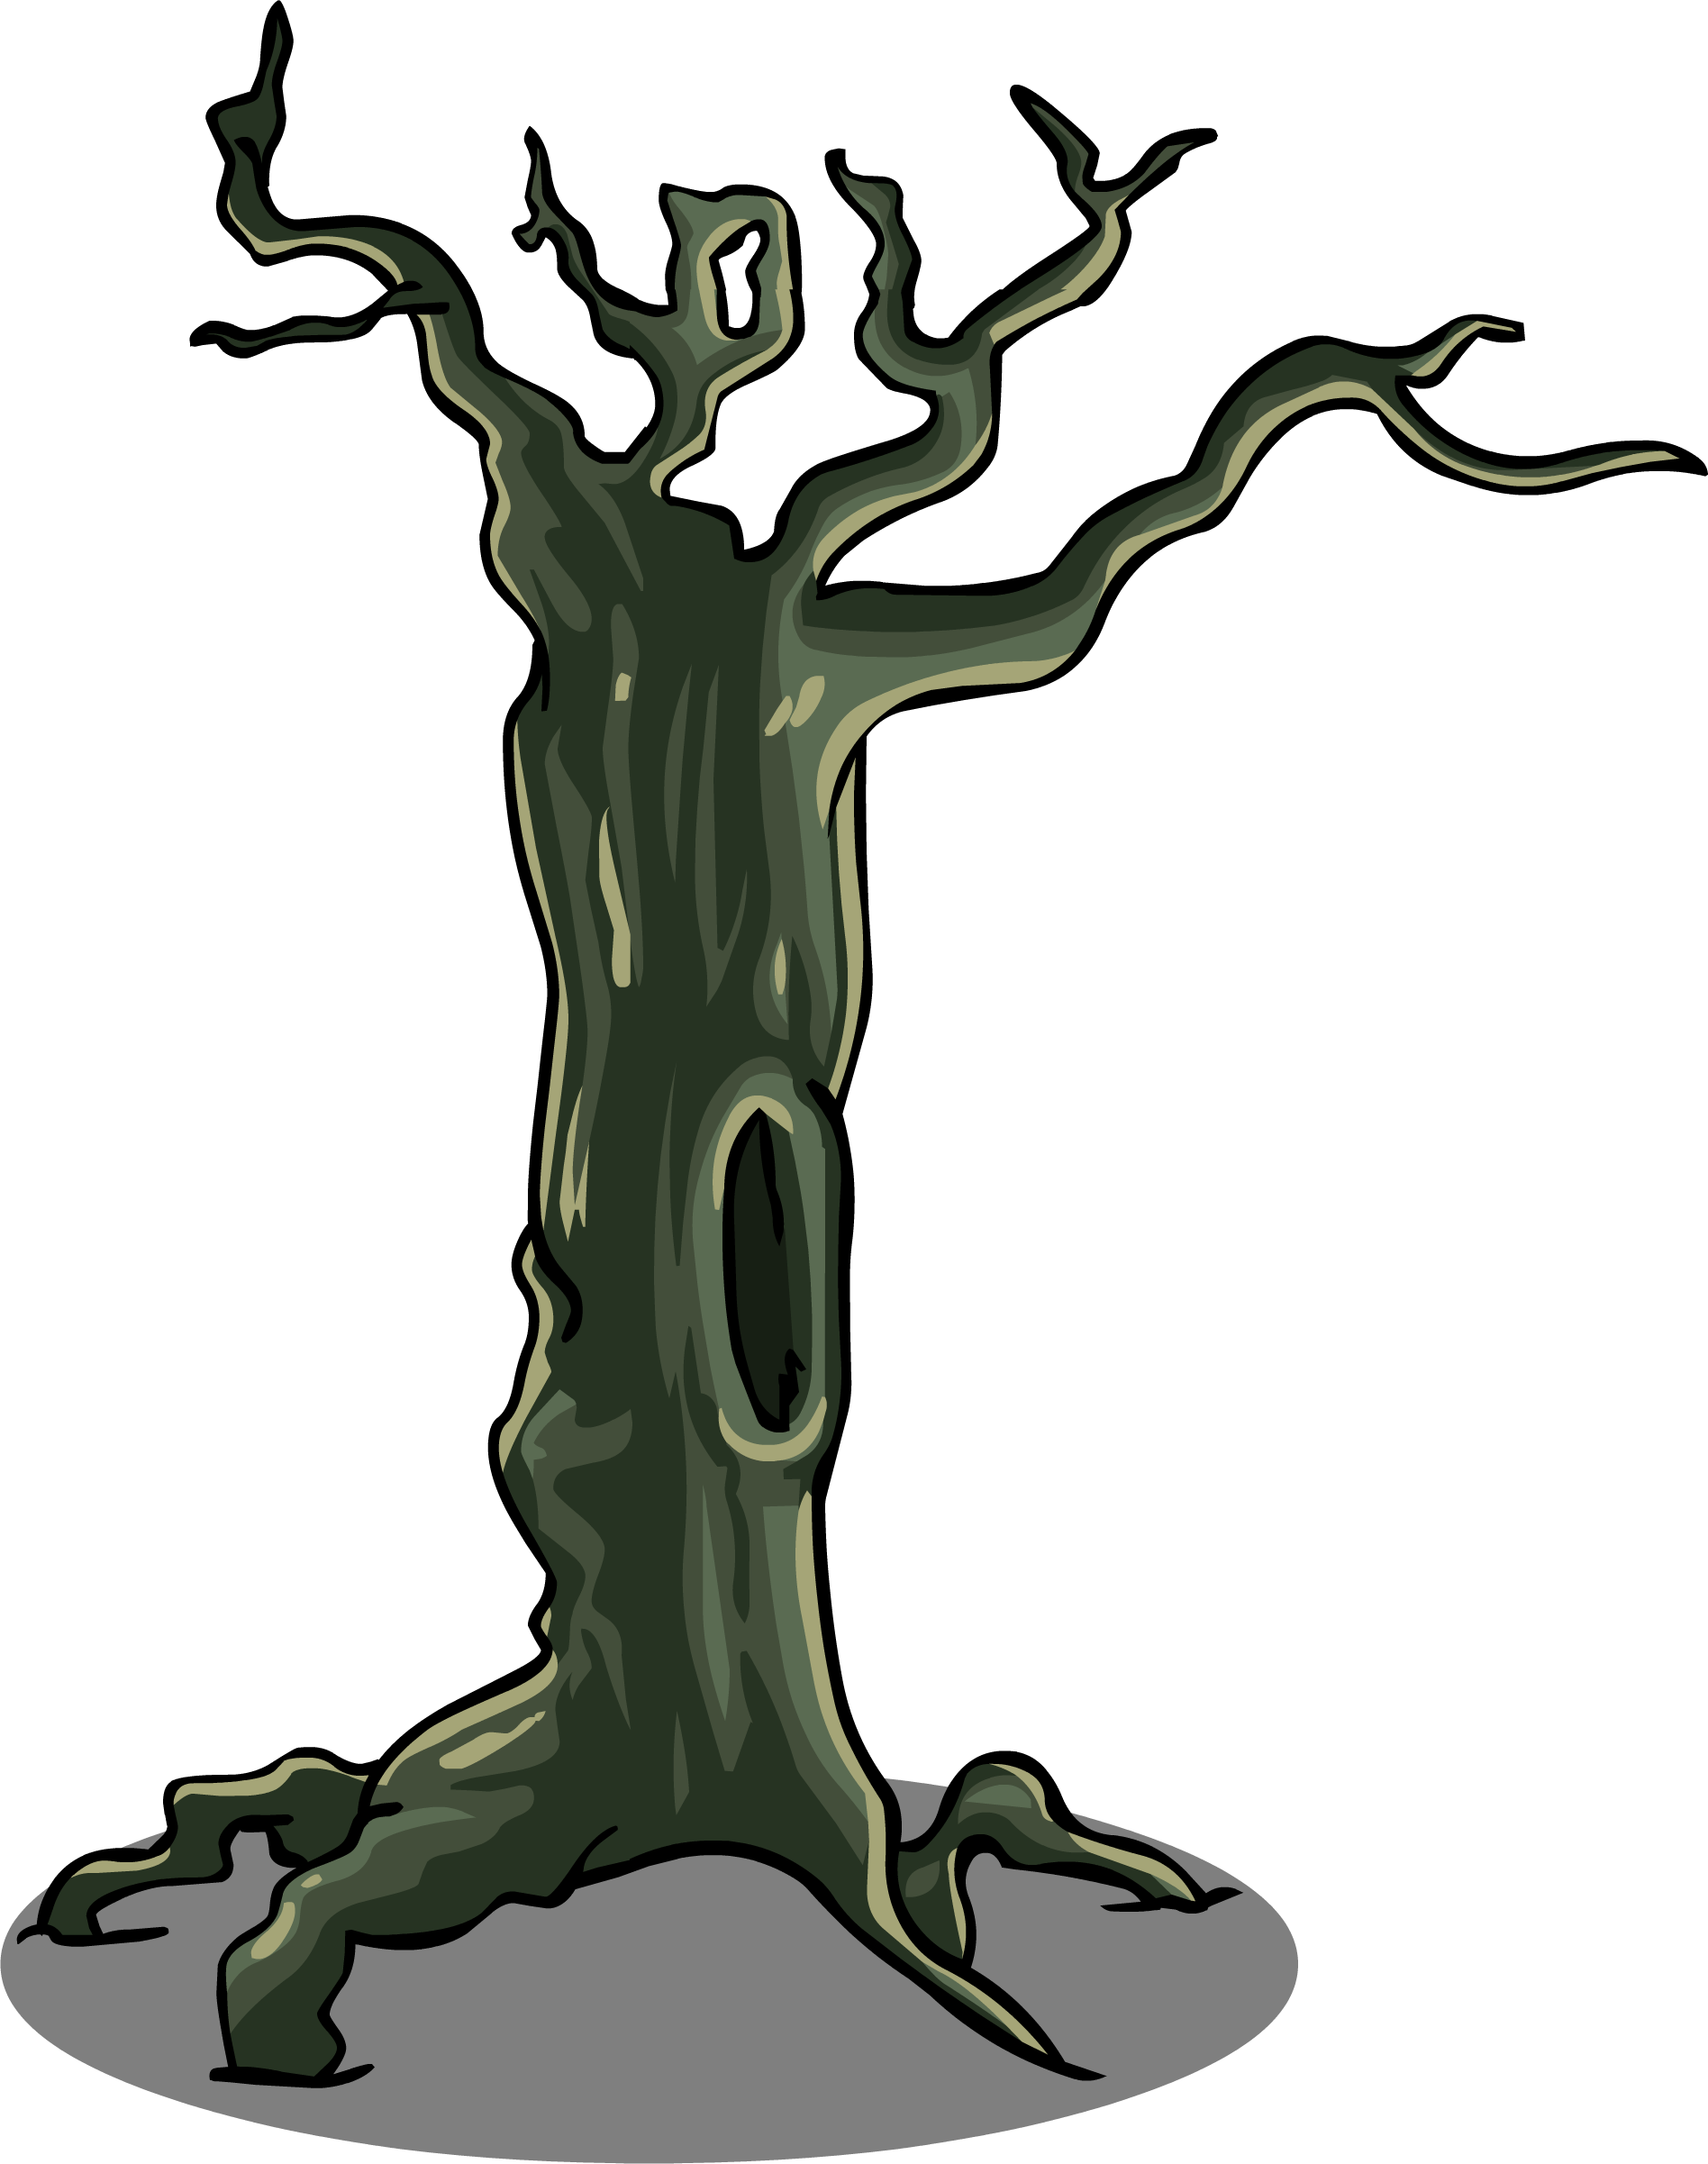 spooky clipart spooky tree